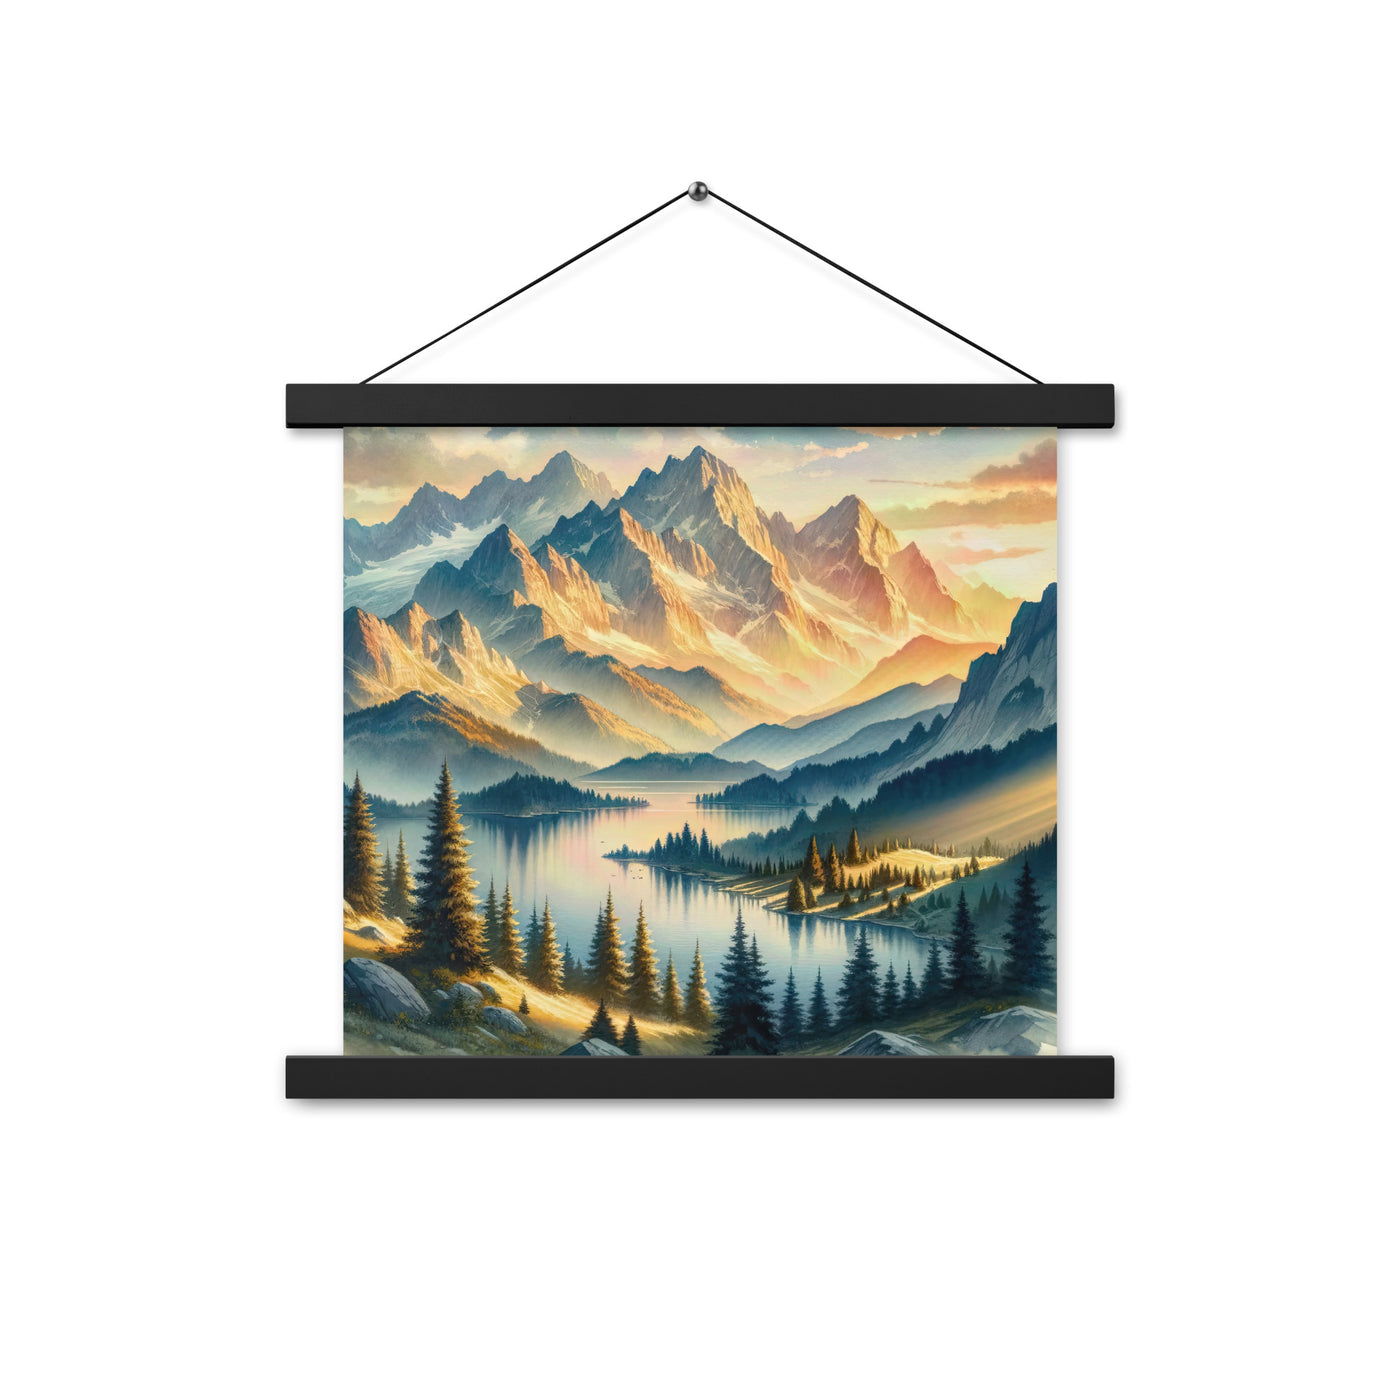 Aquarell der Alpenpracht bei Sonnenuntergang, Berge im goldenen Licht - Premium Poster mit Aufhängung berge xxx yyy zzz 35.6 x 35.6 cm